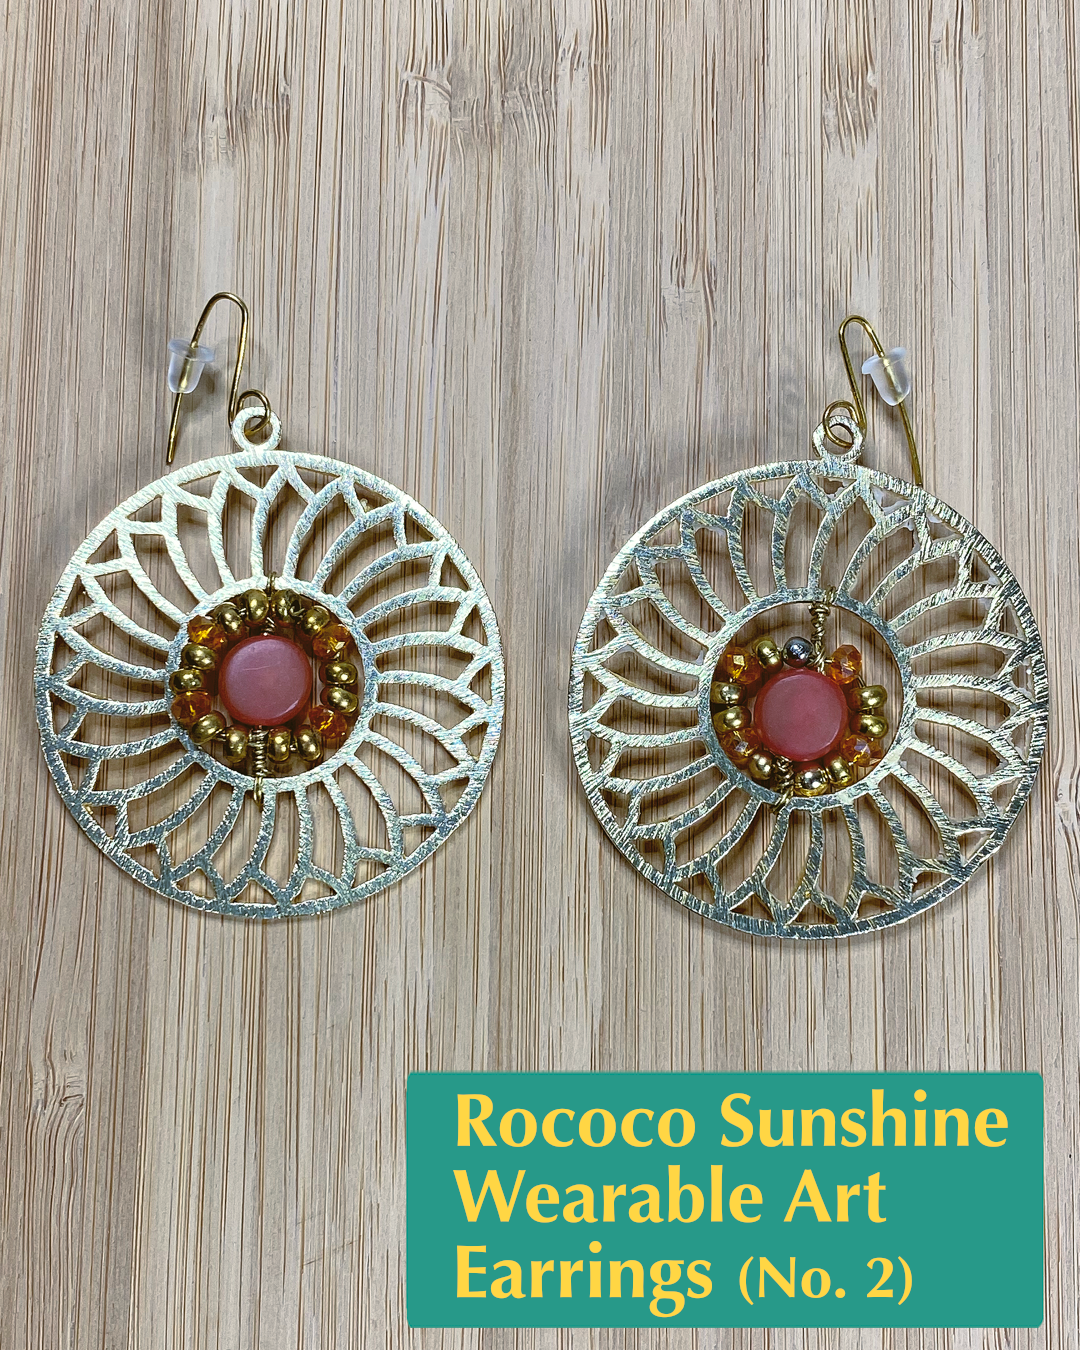 Rococo Sunshine Wearable Art Earrings No. 2